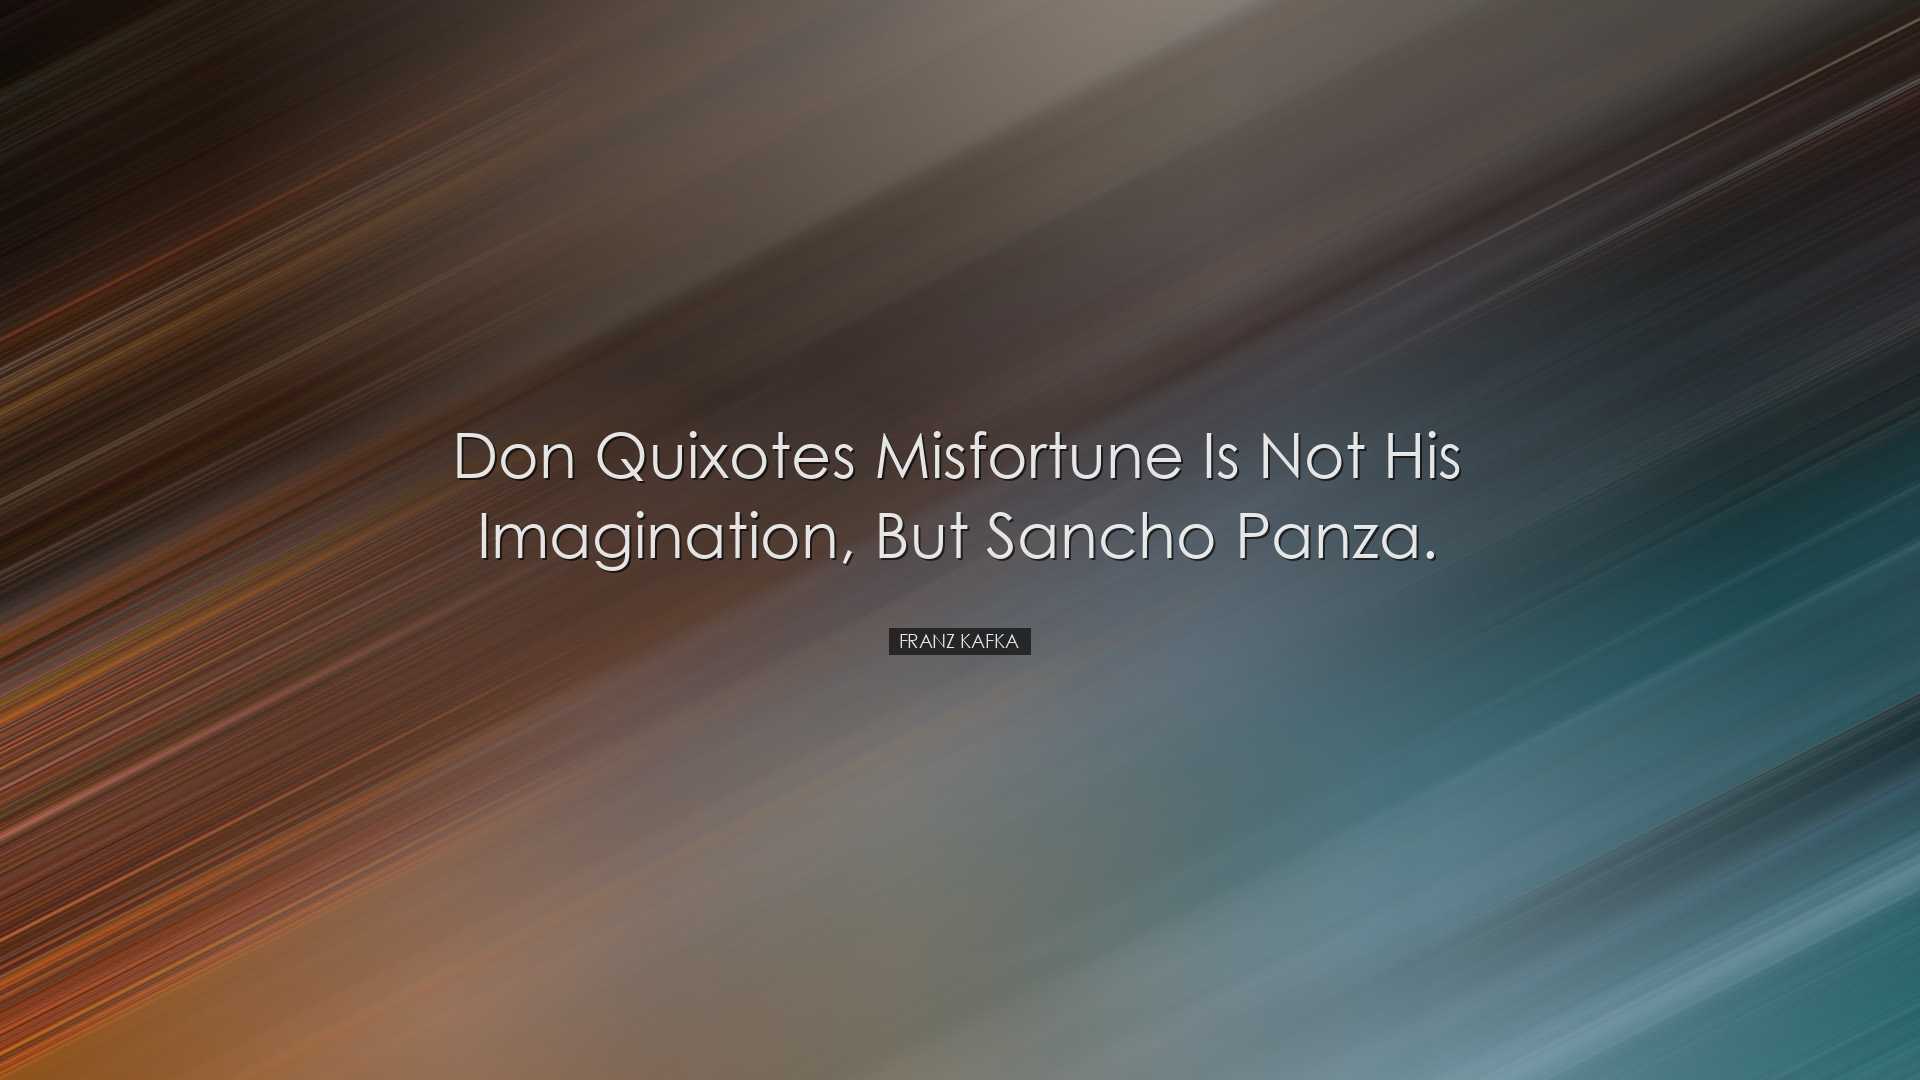 Don Quixotes misfortune is not his imagination, but Sancho Panza.